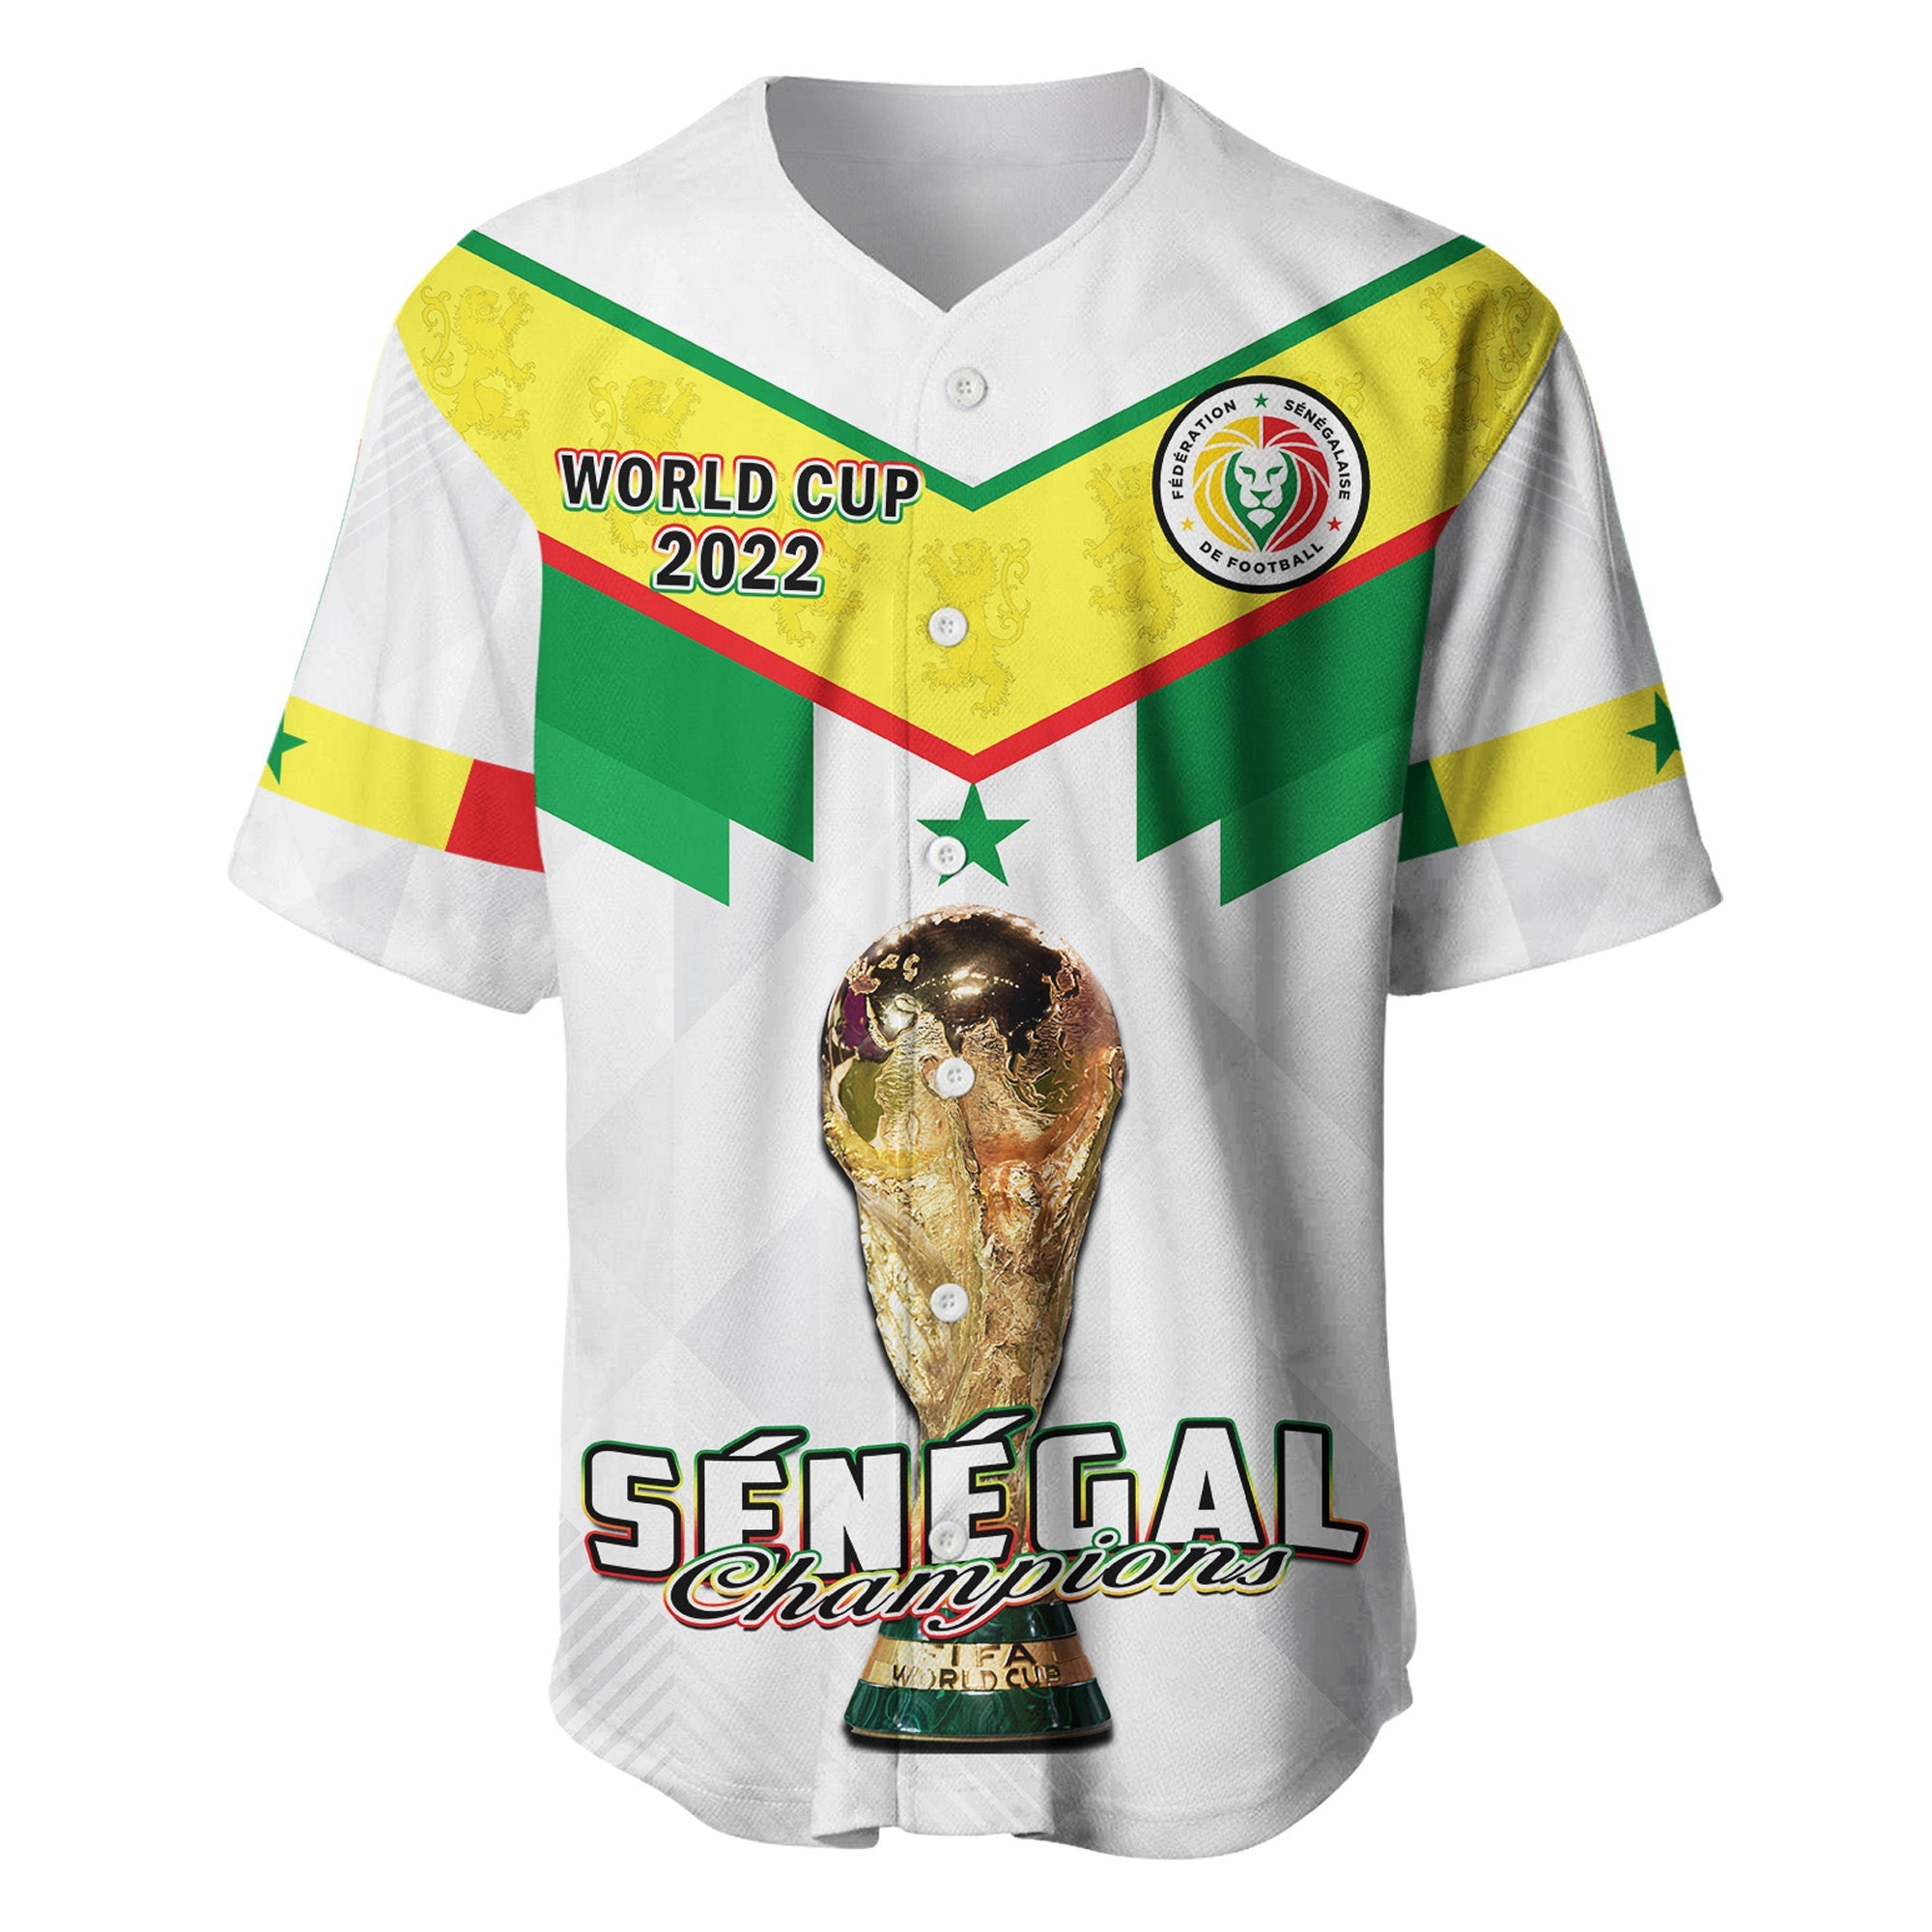 senegal-football-baseball-jersey-champions-wc-2022